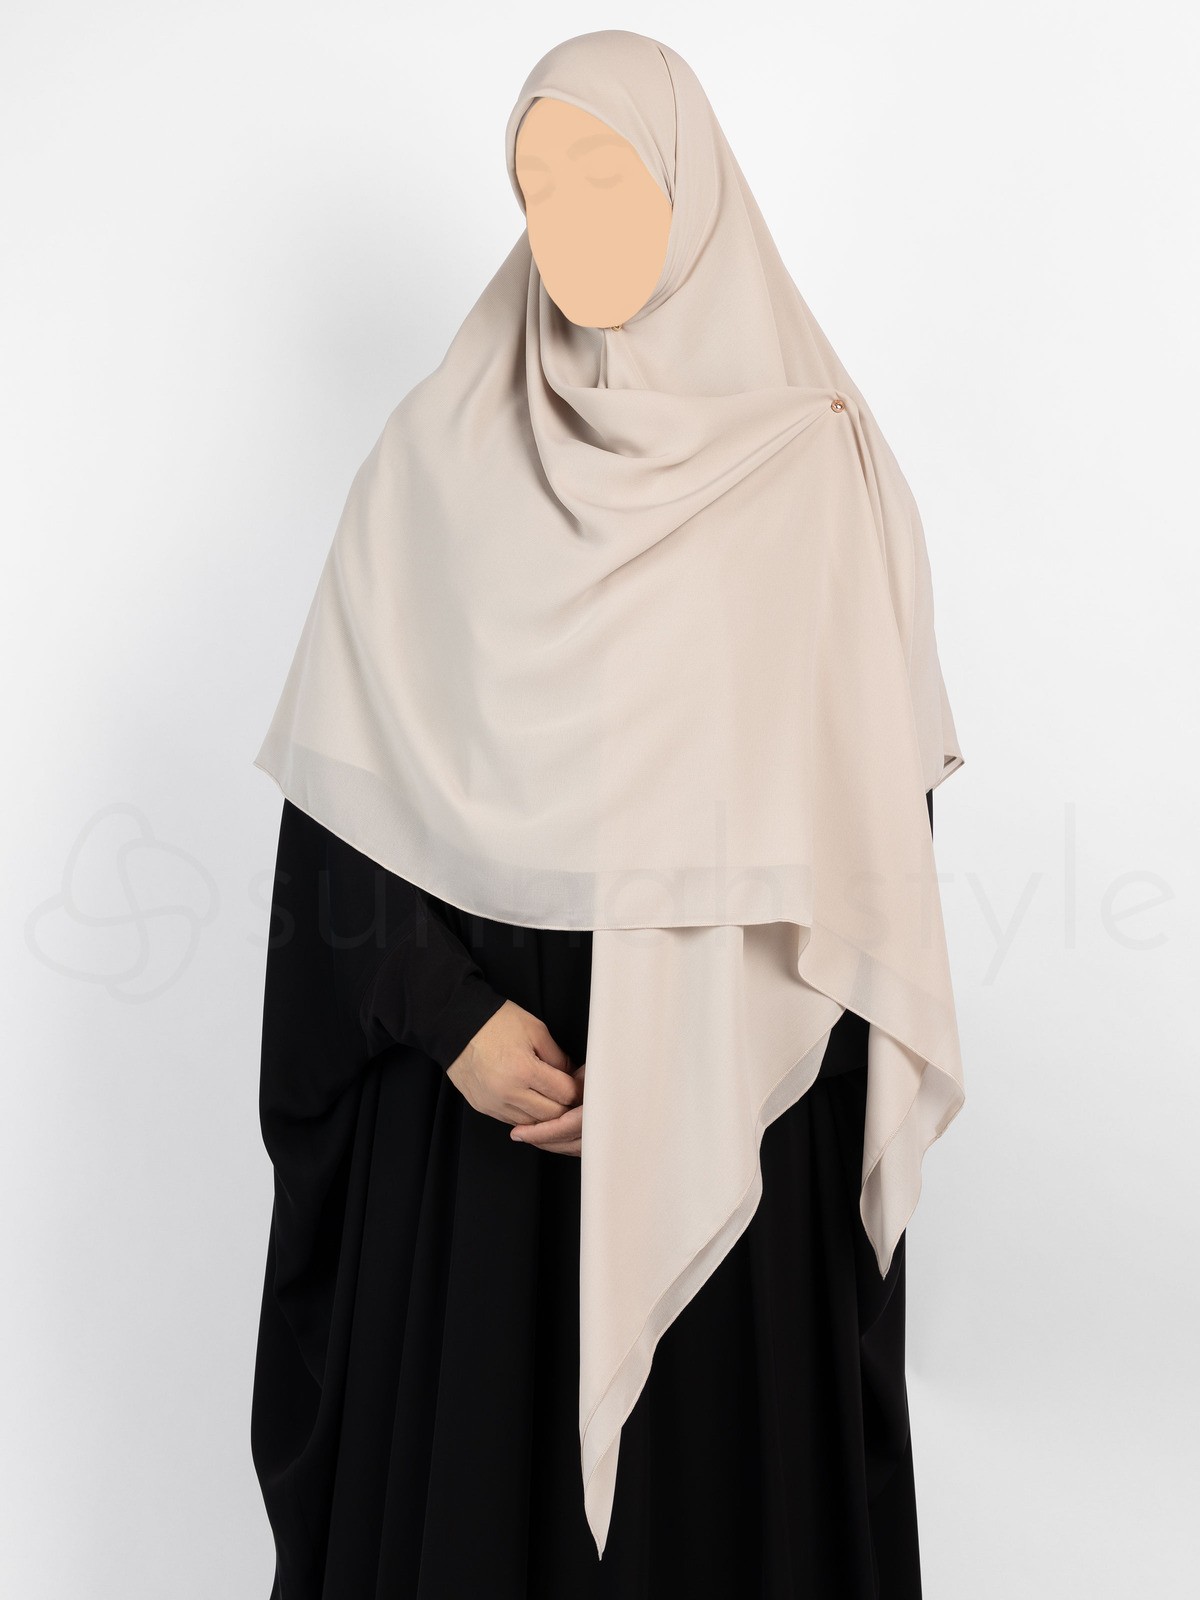 Sunnah Style - Essentials Square Hijab (Premium Chiffon) - XL (Sahara)